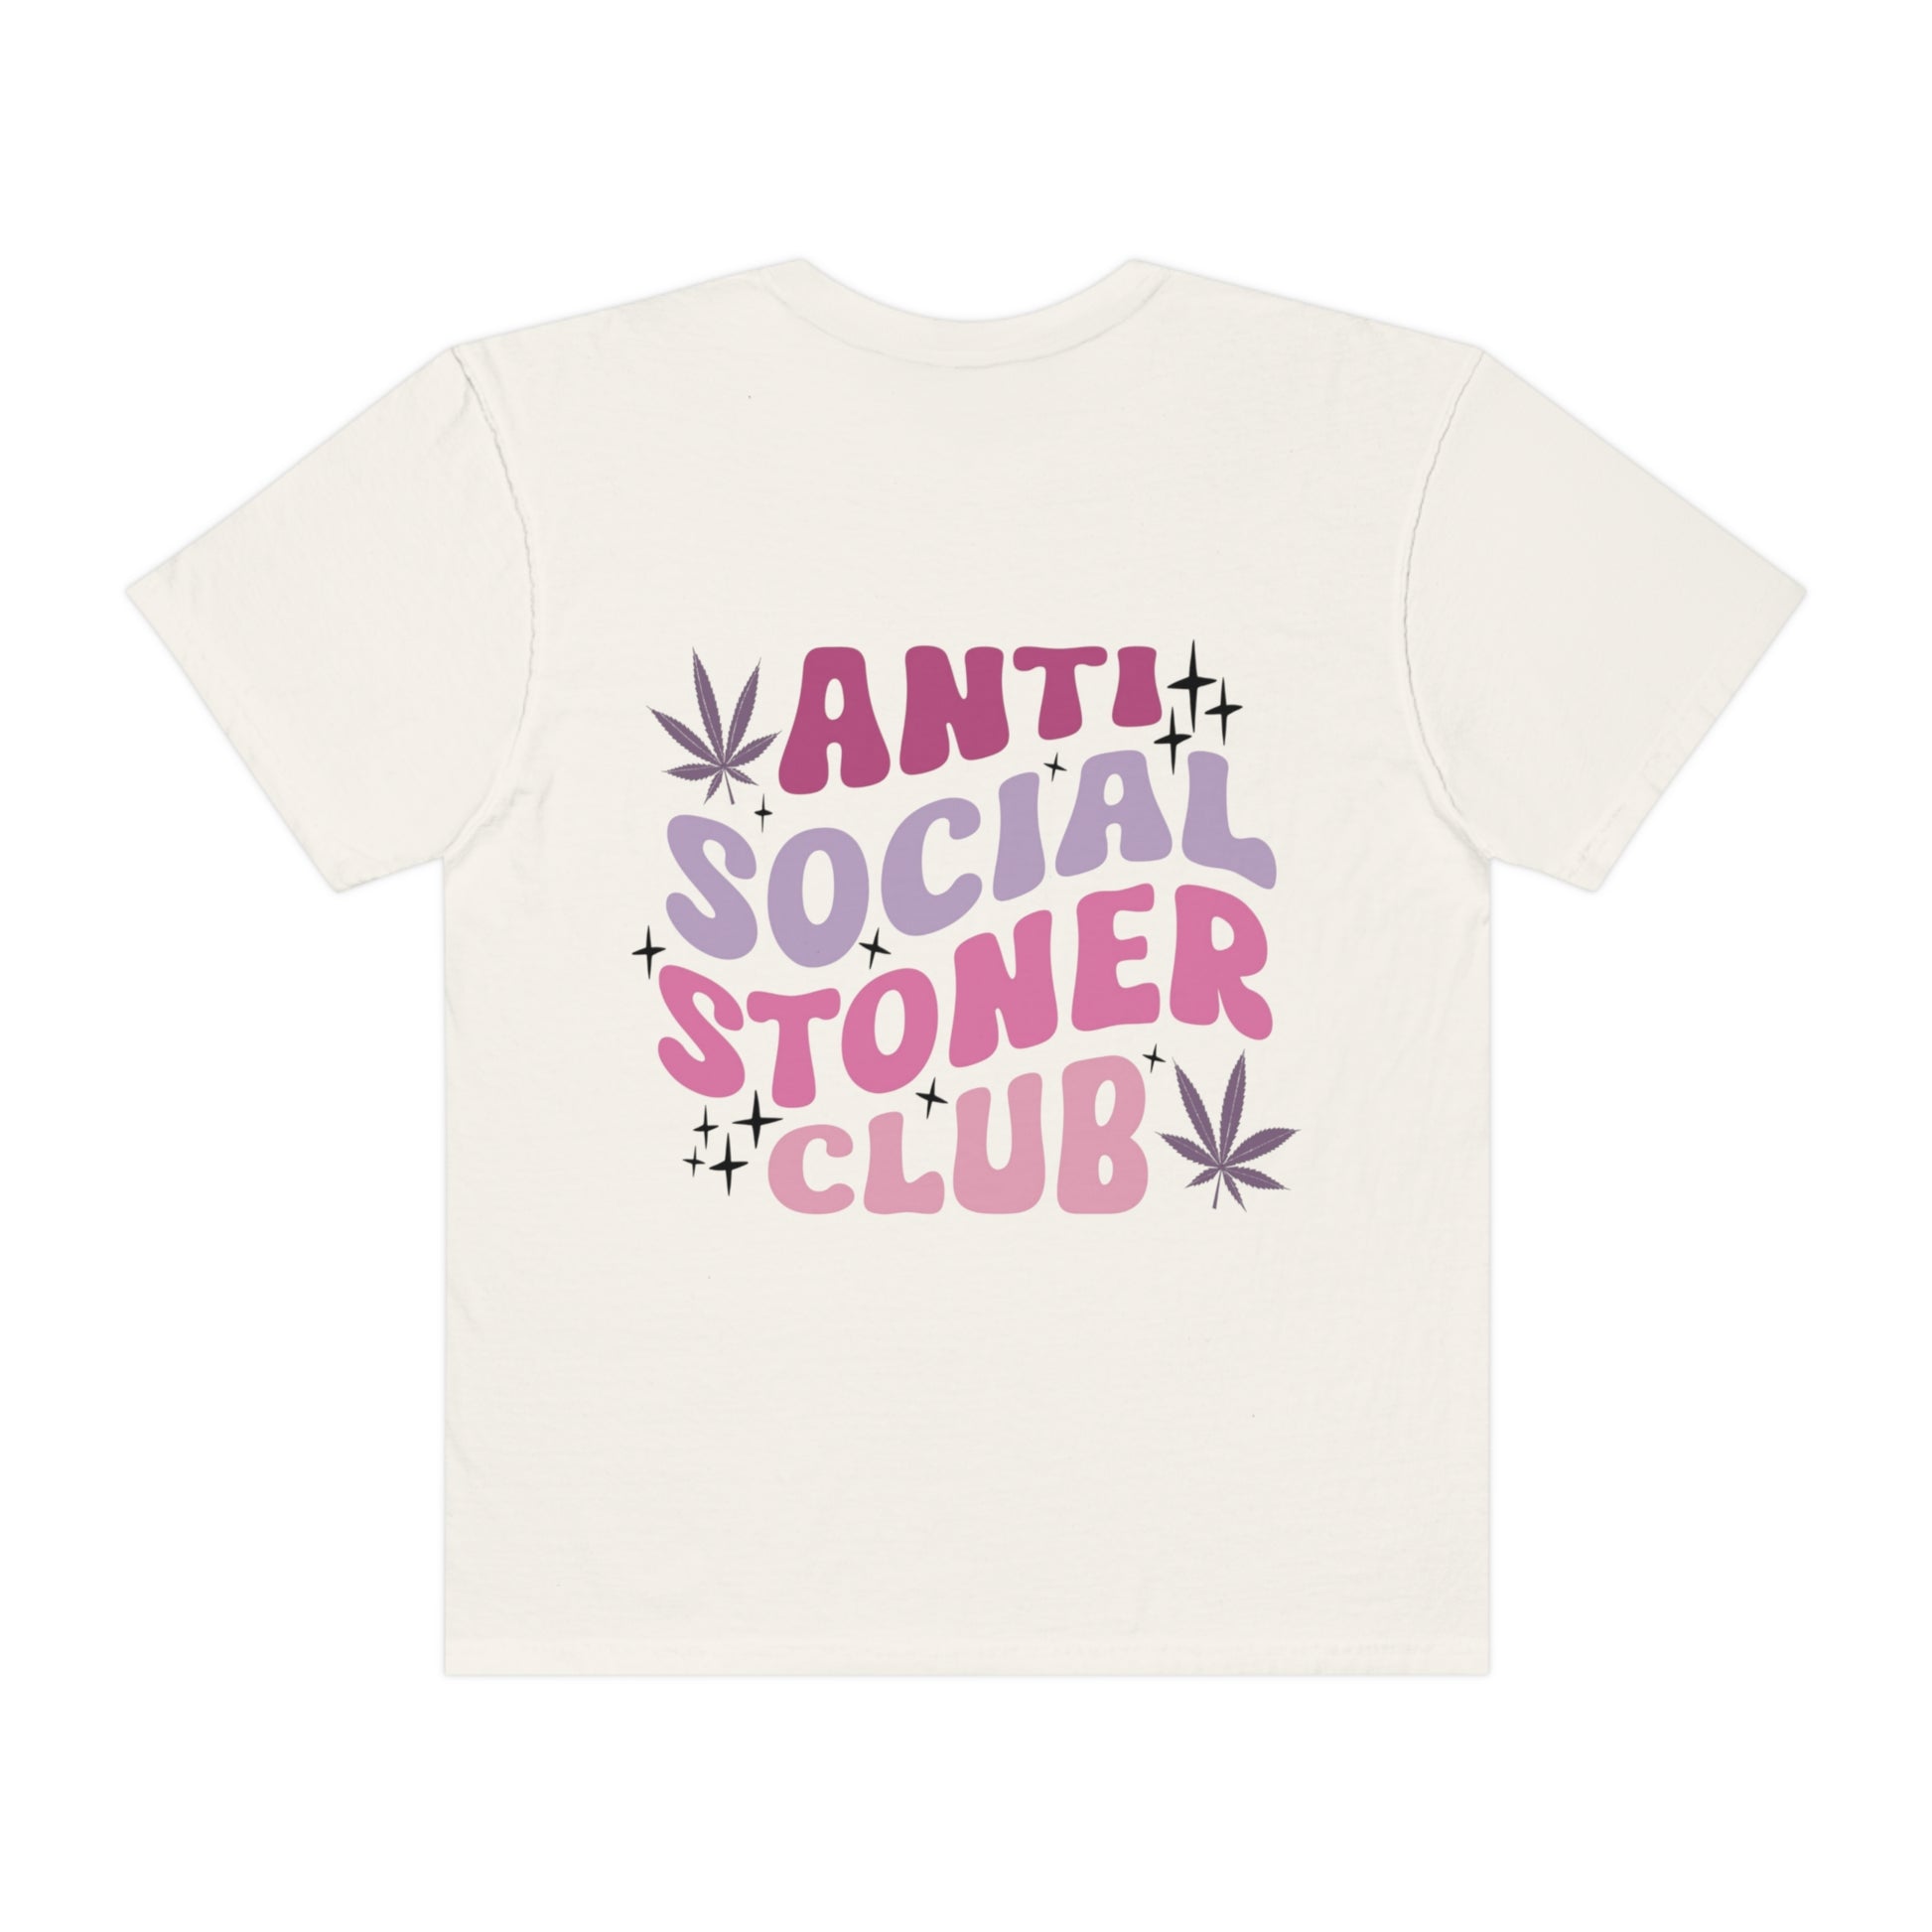 Amti Social Stoner Club shirt - Blaze It Candle Co